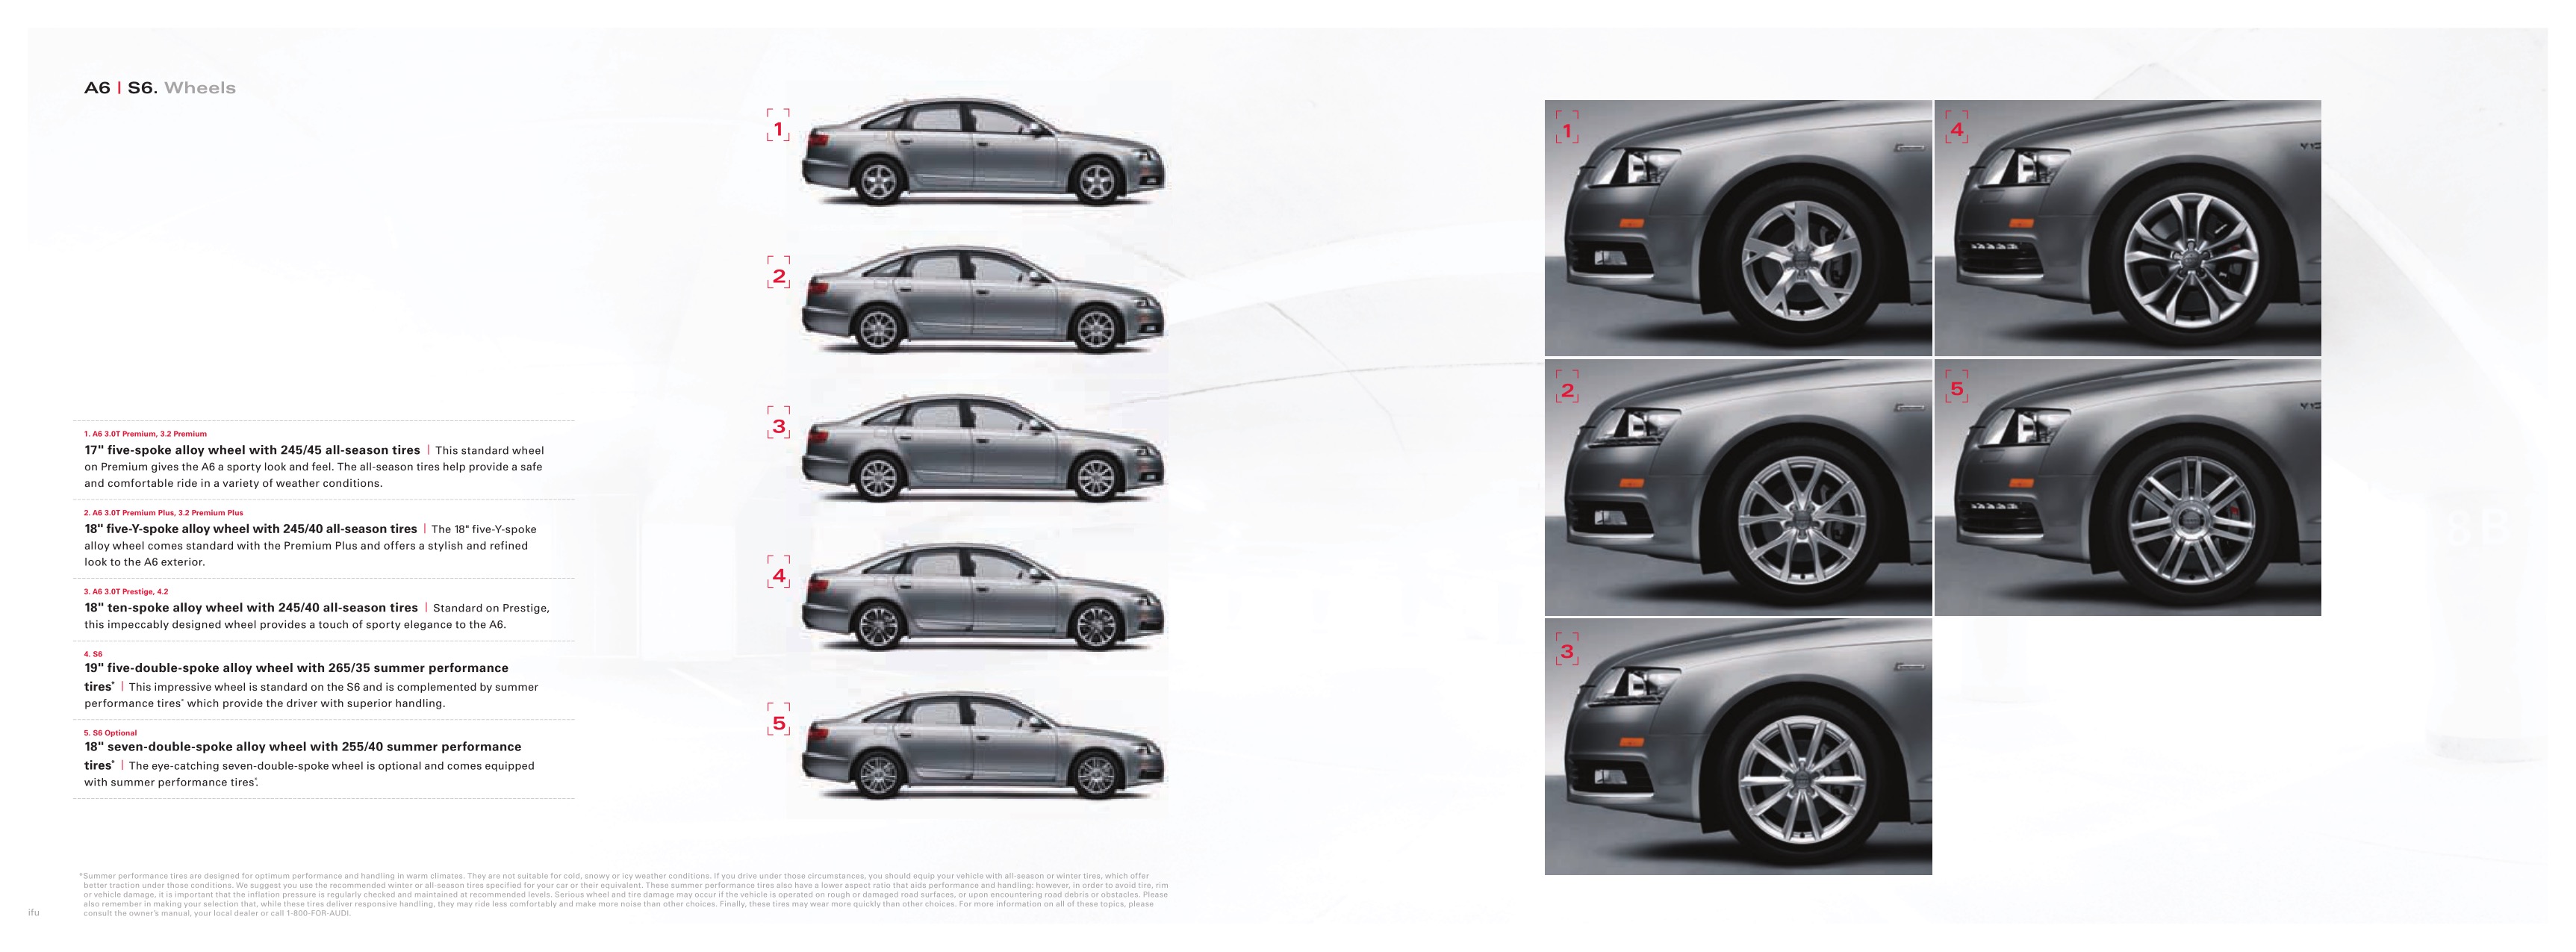 2009 Audi A6 Brochure Page 6